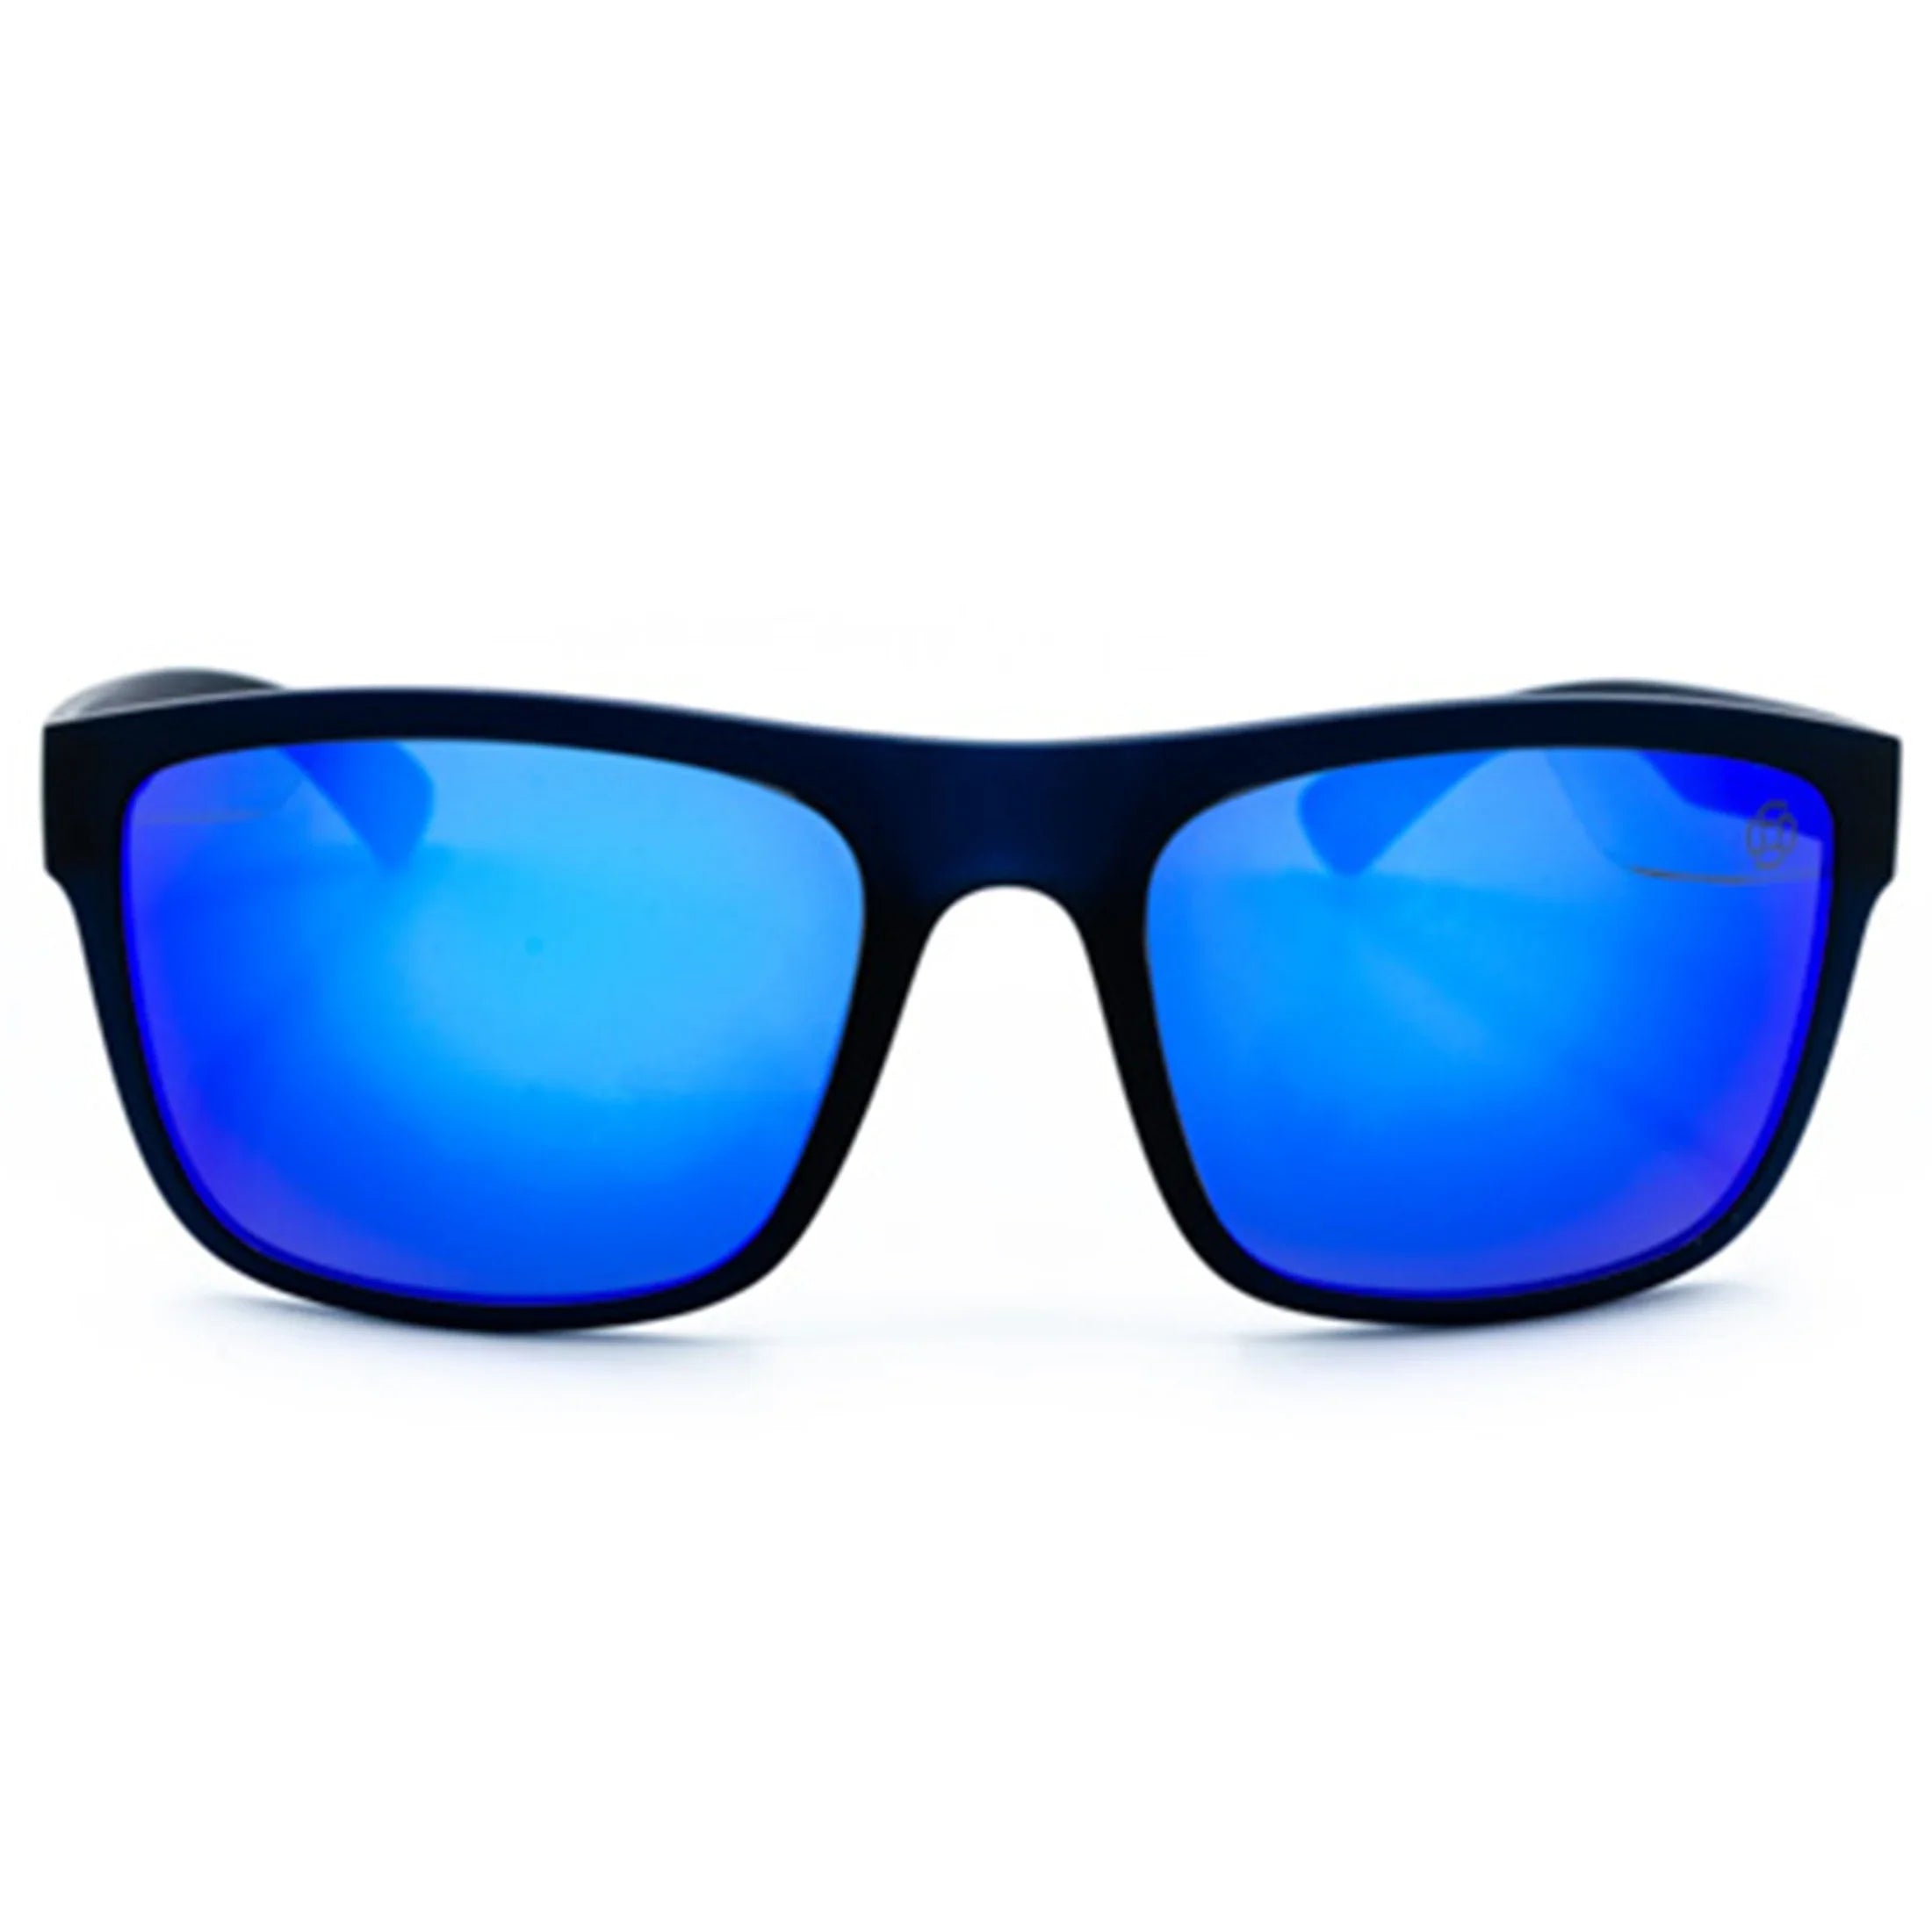 J. Athletics Mr. Holly Jones Sunglasses 55-17 - Black-Blue